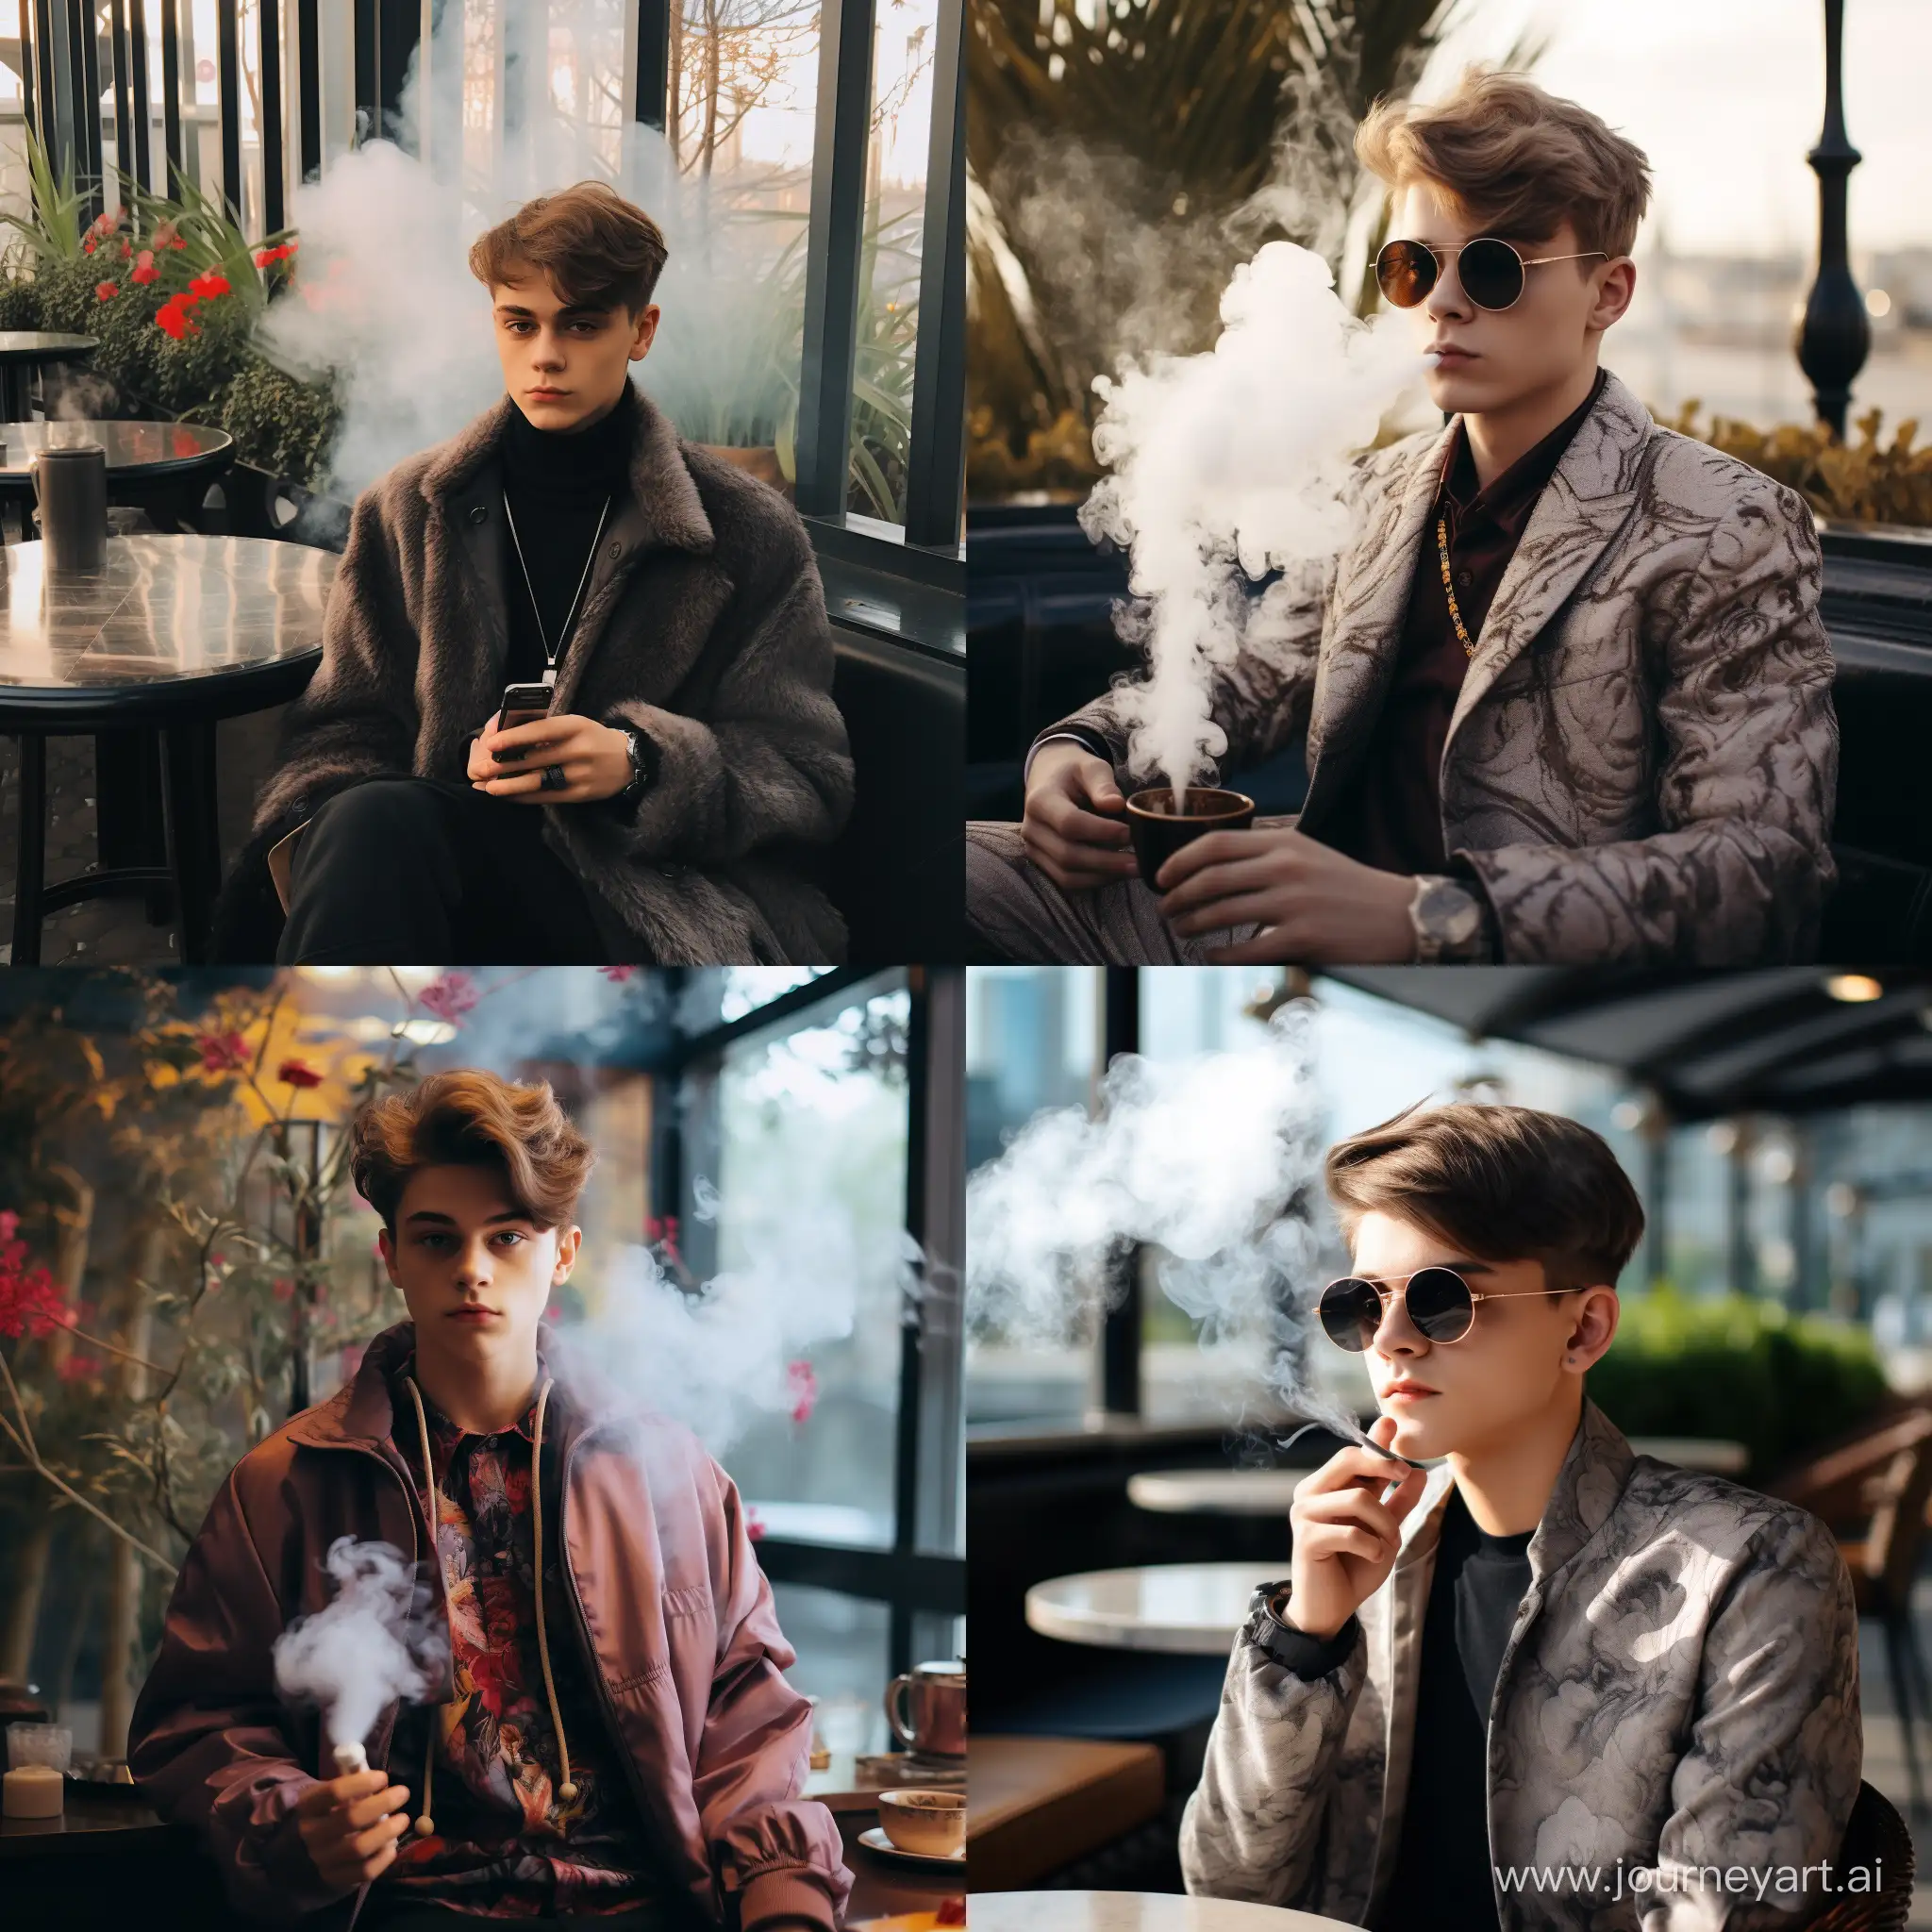 Fashionable-Teenager-Alexander-Koshchuk-Vaping-in-Contemporary-Style